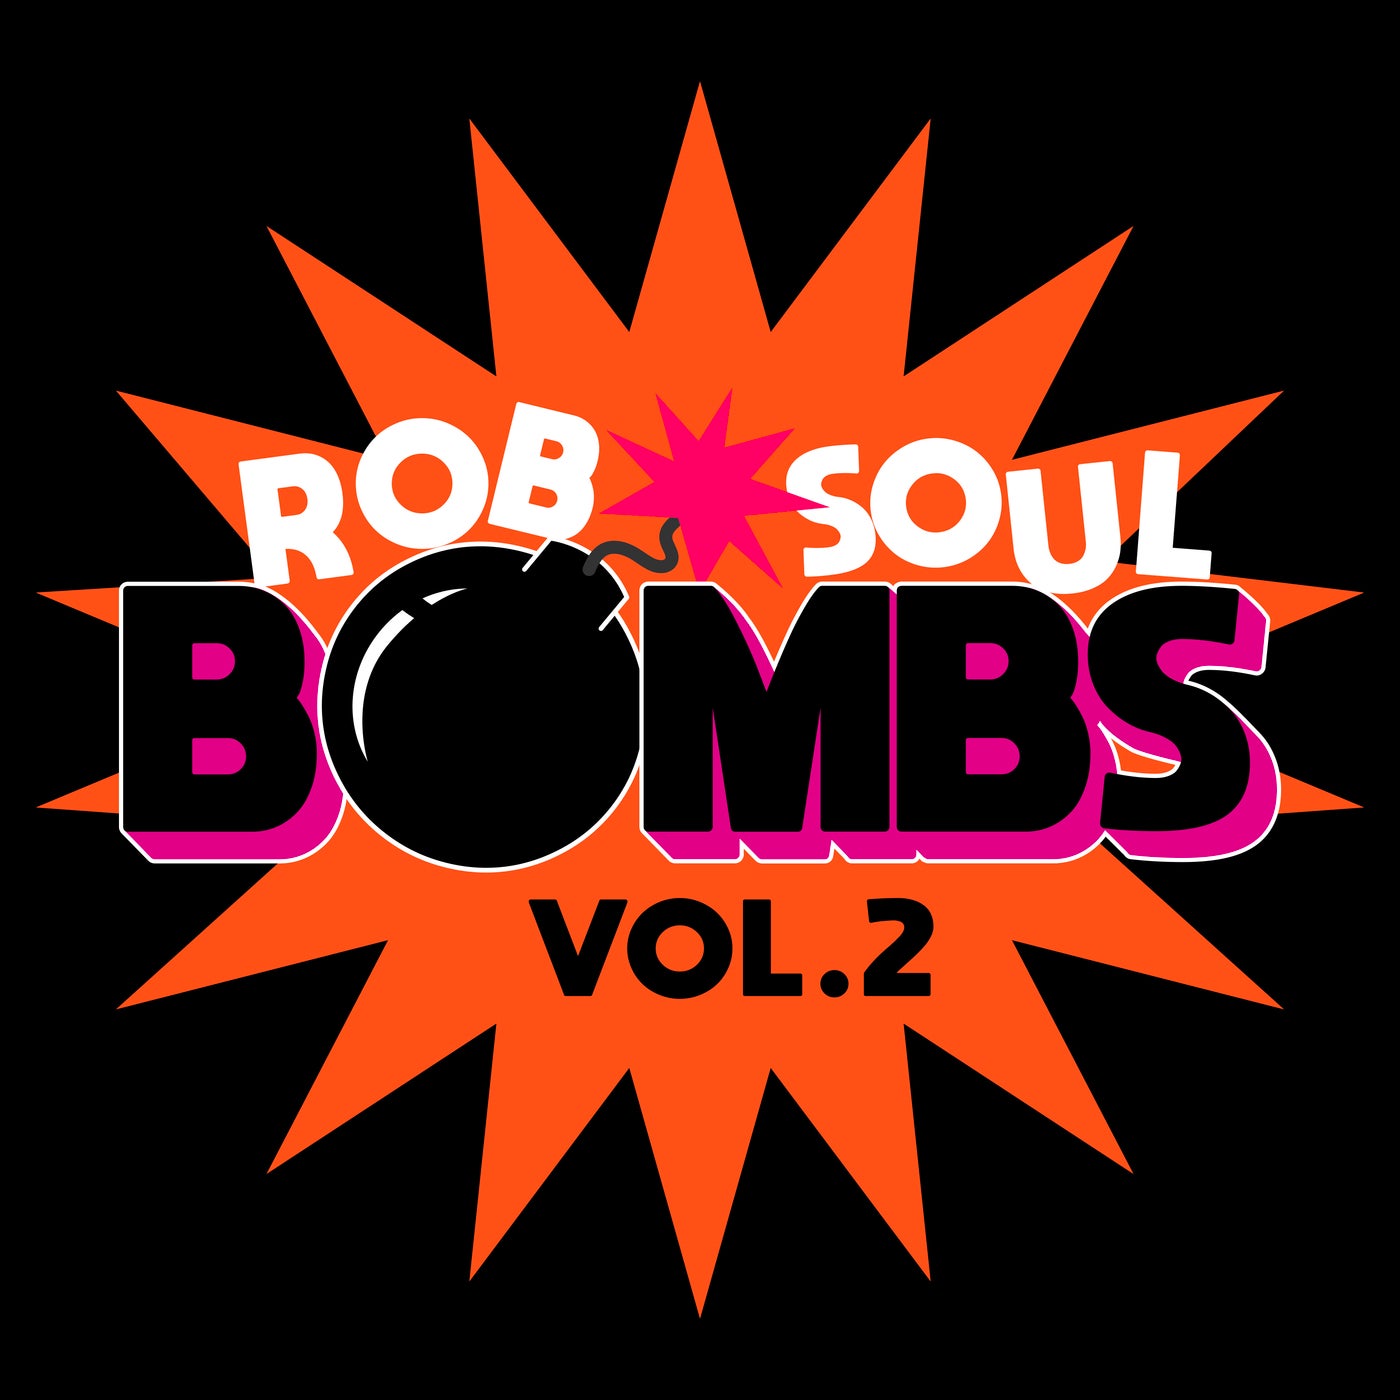 Robsoul Bombs Vol.2